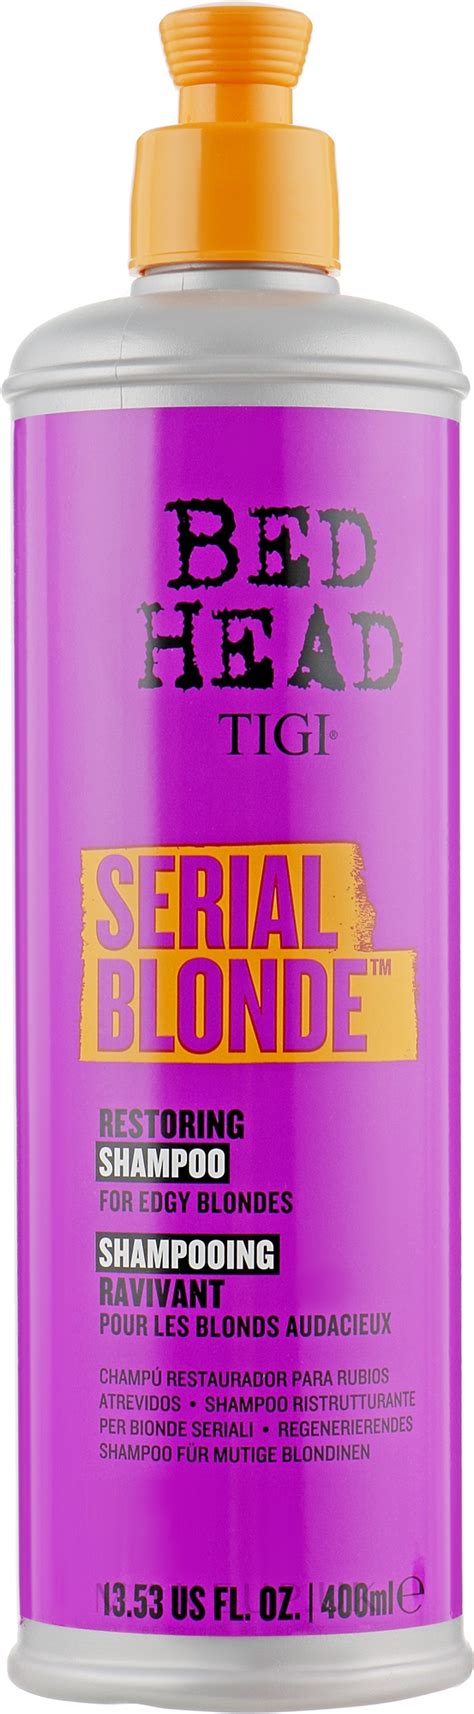 Tigi Bed Head Serial Blonde Shampoo Blonde Hair Shampoo Makeup Uk